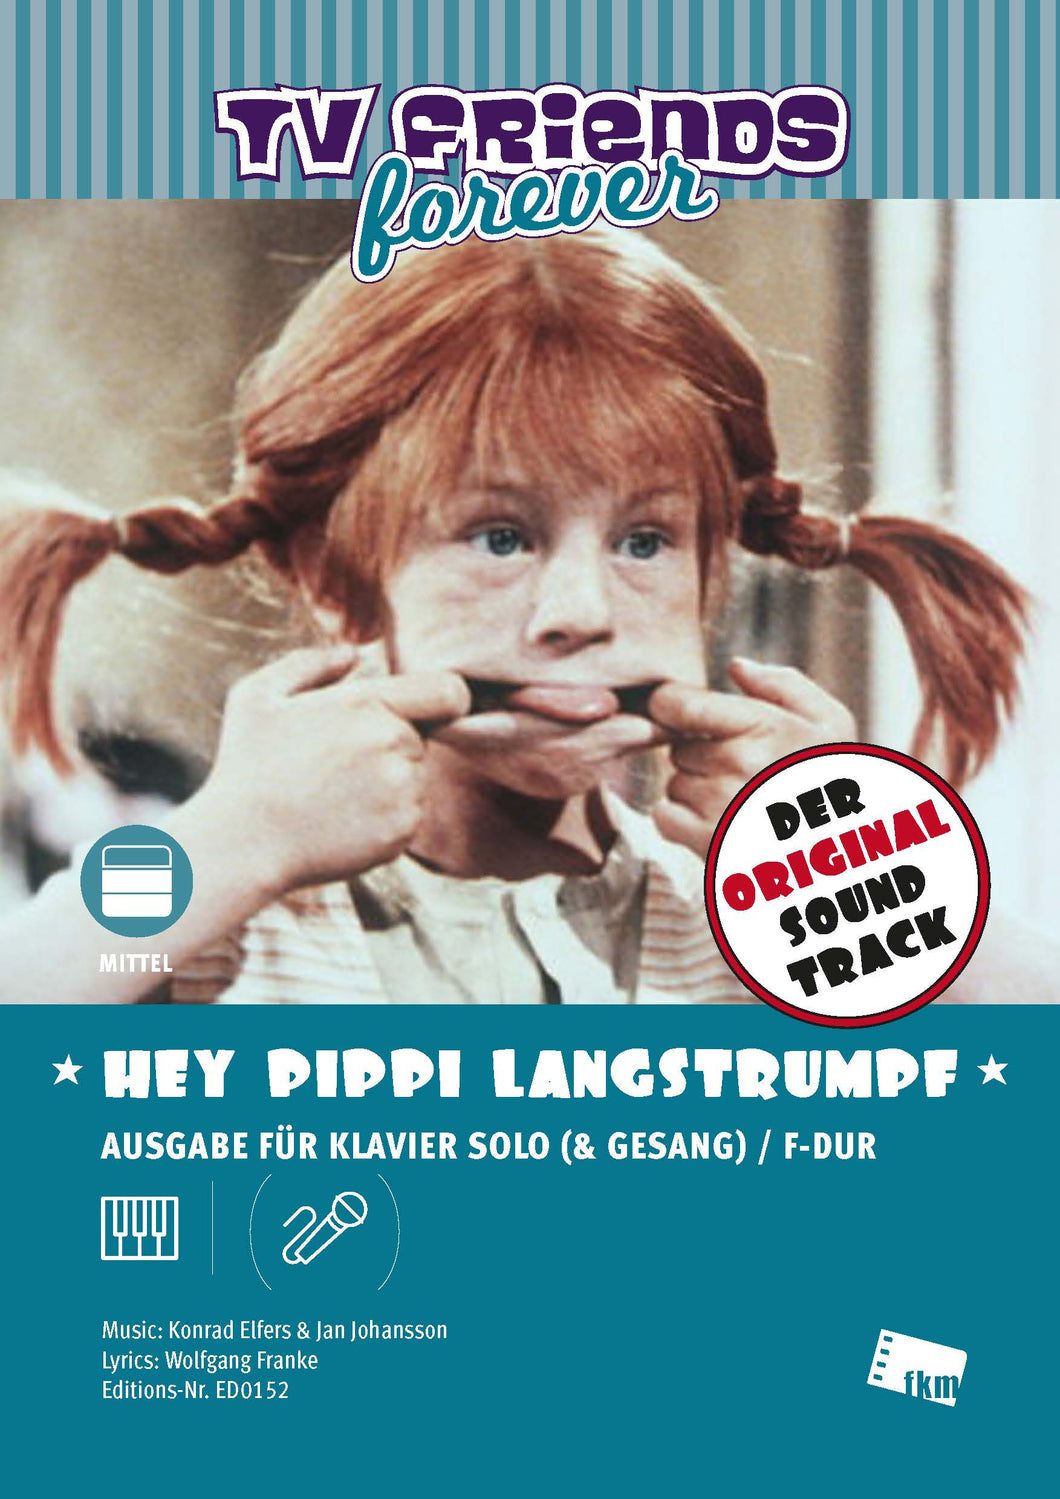 Johansson, Jan: Hey, Pippi Langstrumpf (Piano Cover) - Sheet Music Download